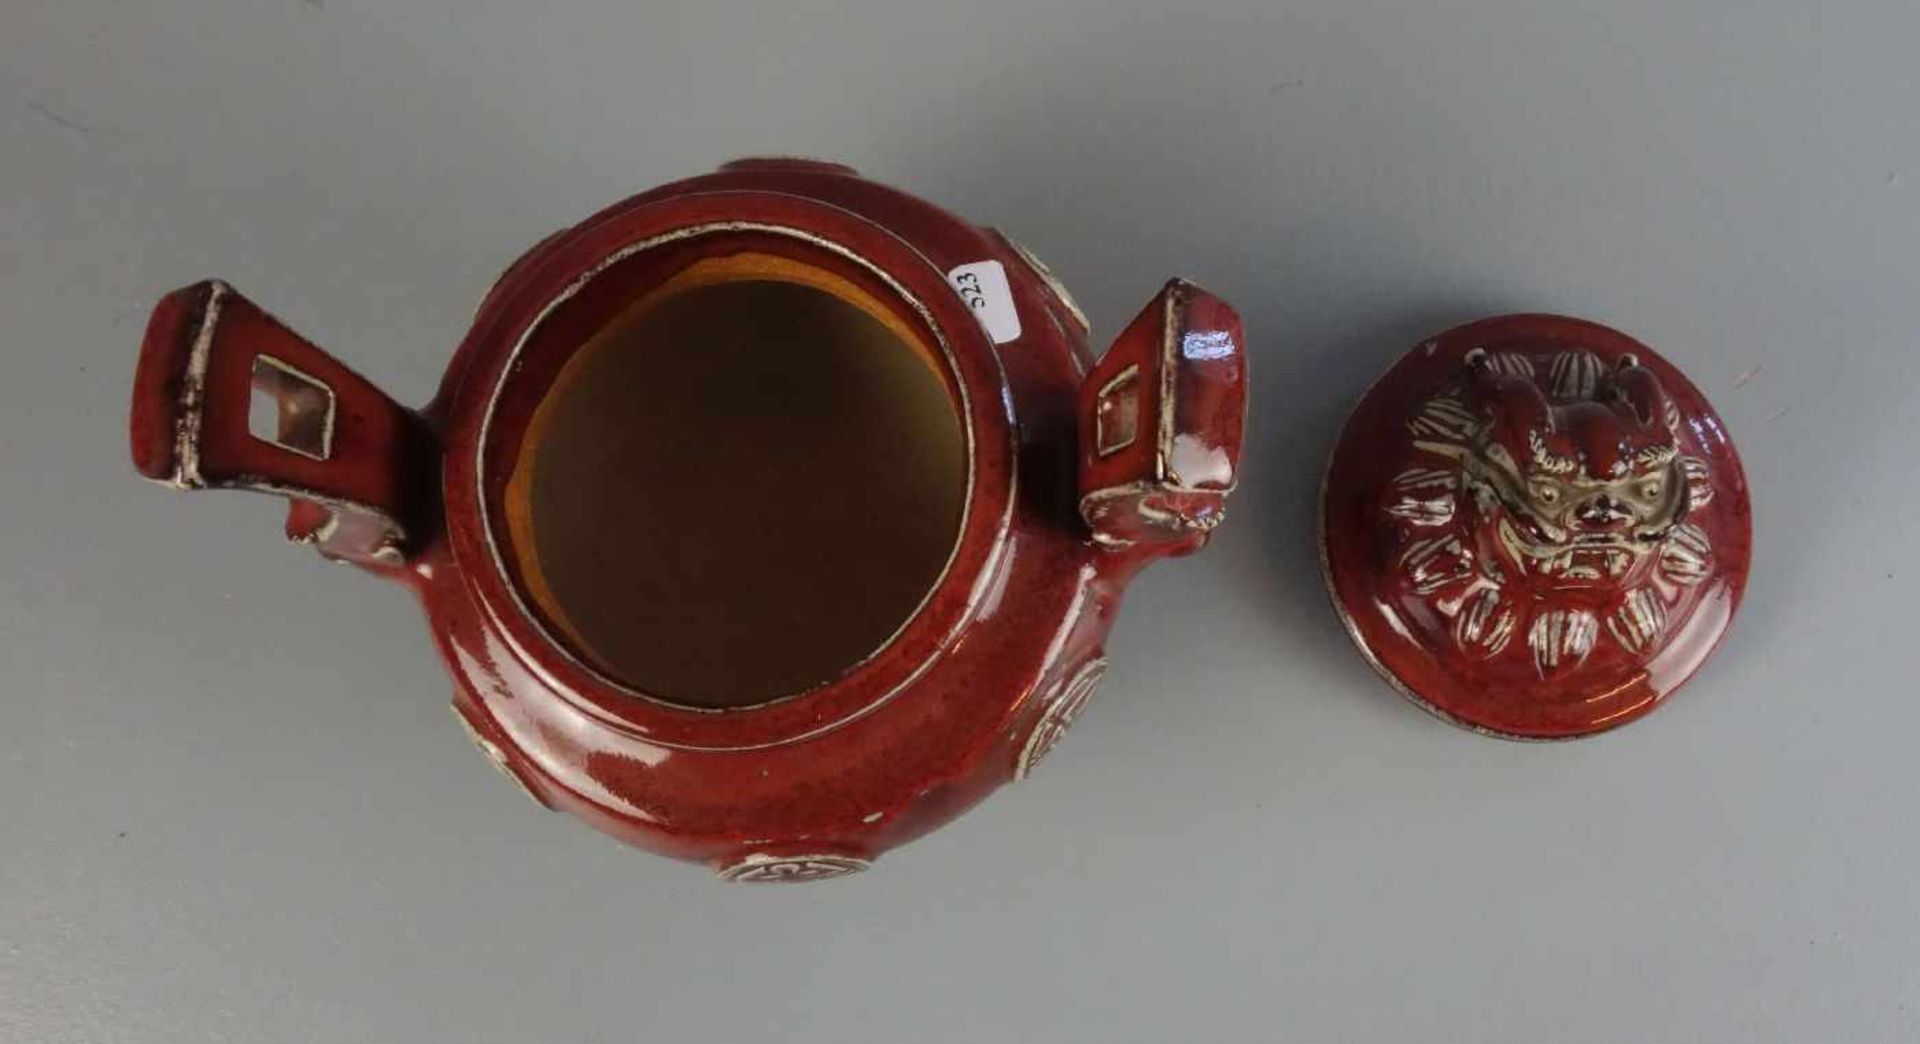 KORO / WEIHRAUCHGEFÄSS / WEIHRAUCHBRENNER, wohl China, 1. H. 20. Jh., Keramik, rote Glasur mit - Image 2 of 3